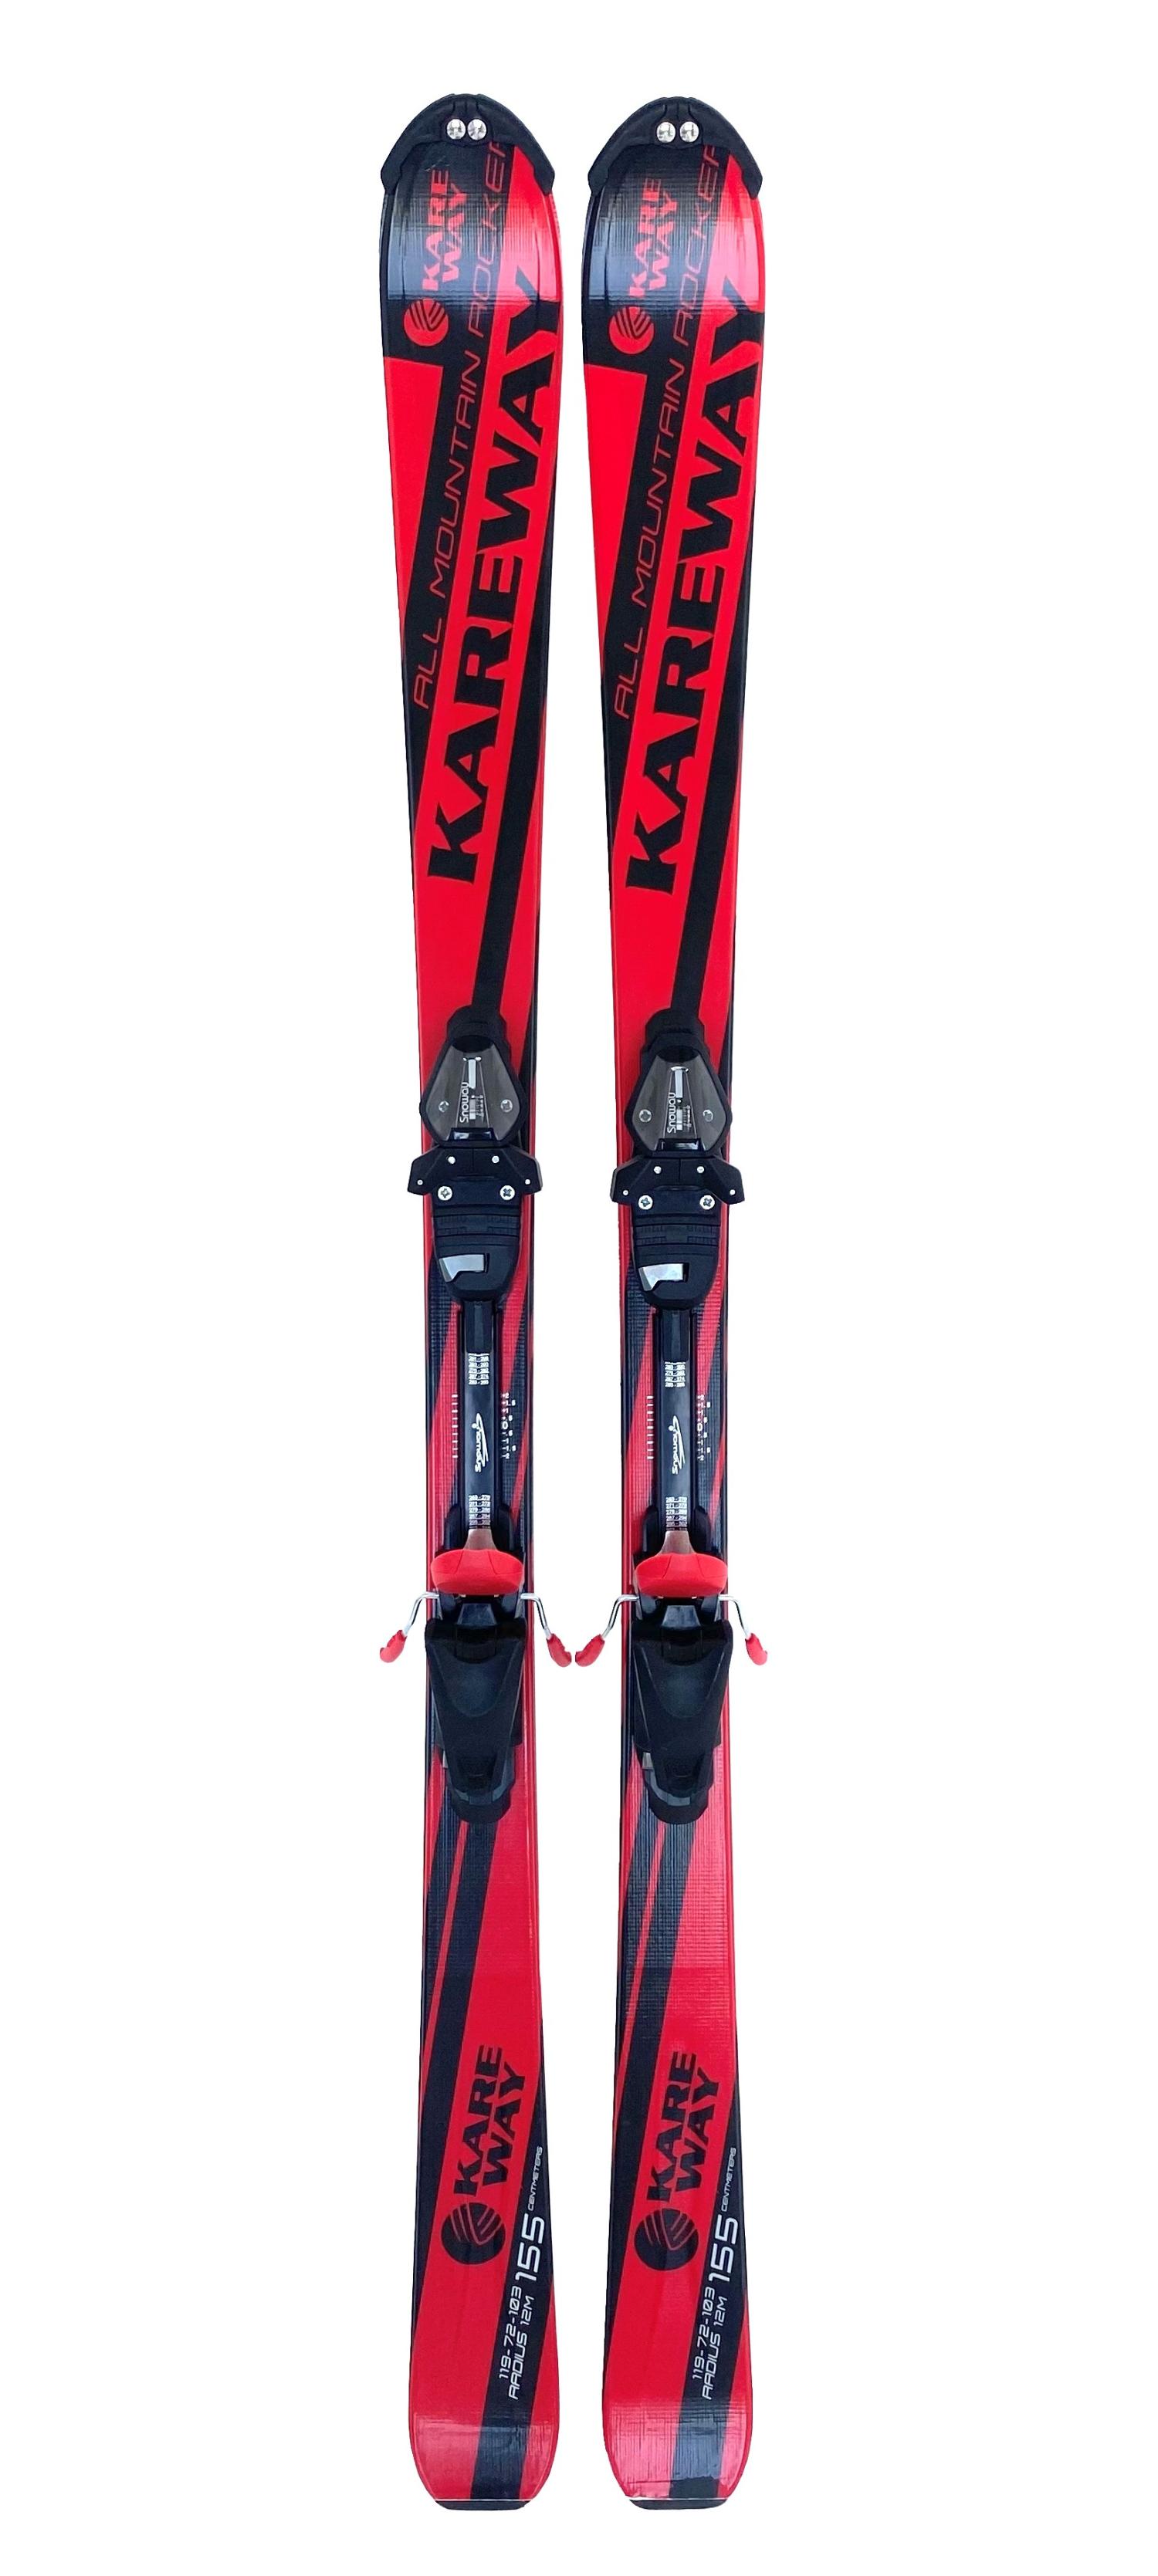 Горные лыжи с креплениями Lightning Kareway Black/Red + кр. Snoway SX 10 lightning black telescopic car key keychain backpack buckle accessory